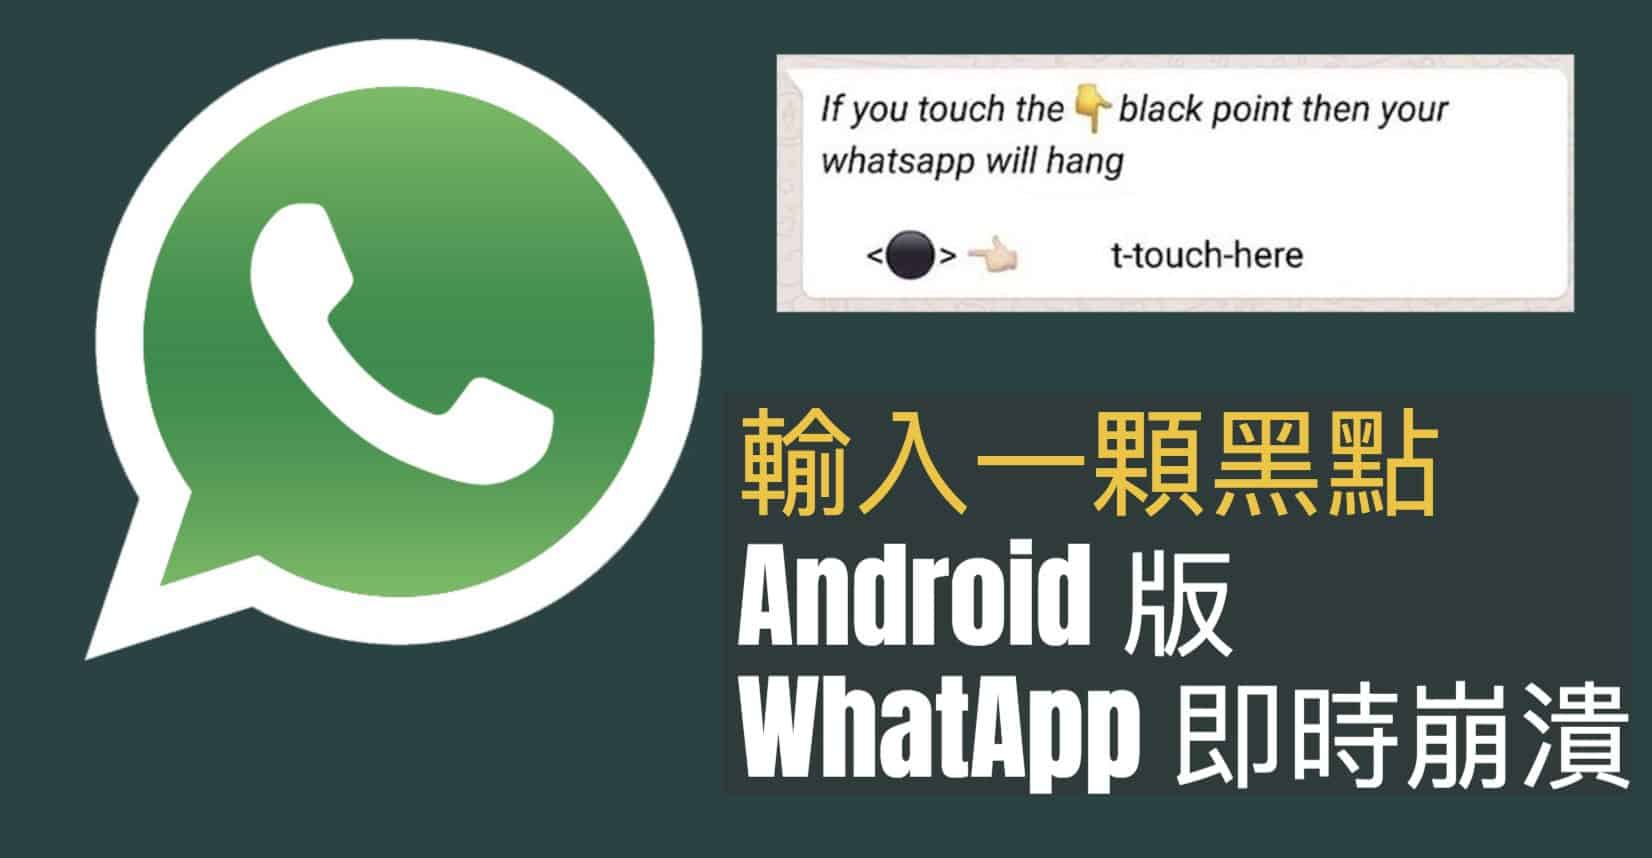 a blackspot can crash whatsapp 00